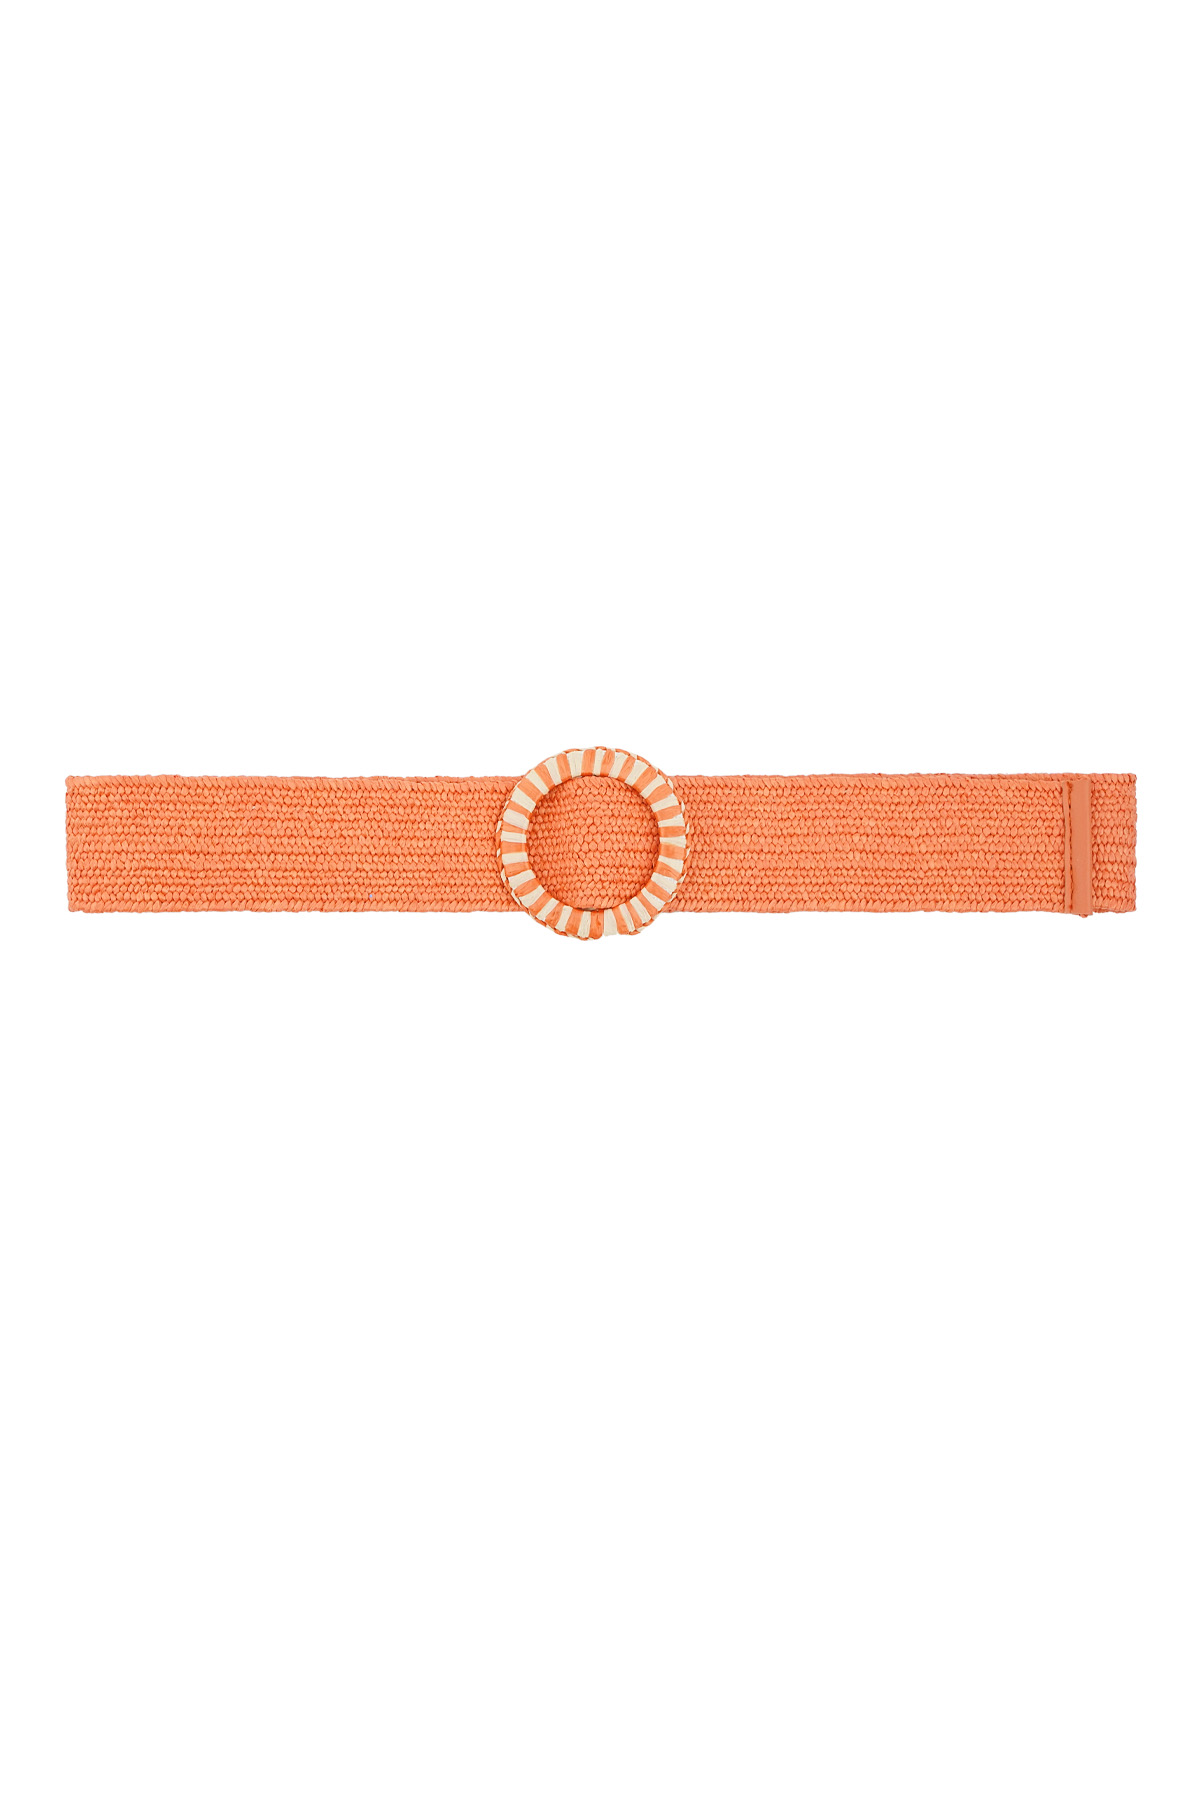 Colorful belt with print - orange  h5 